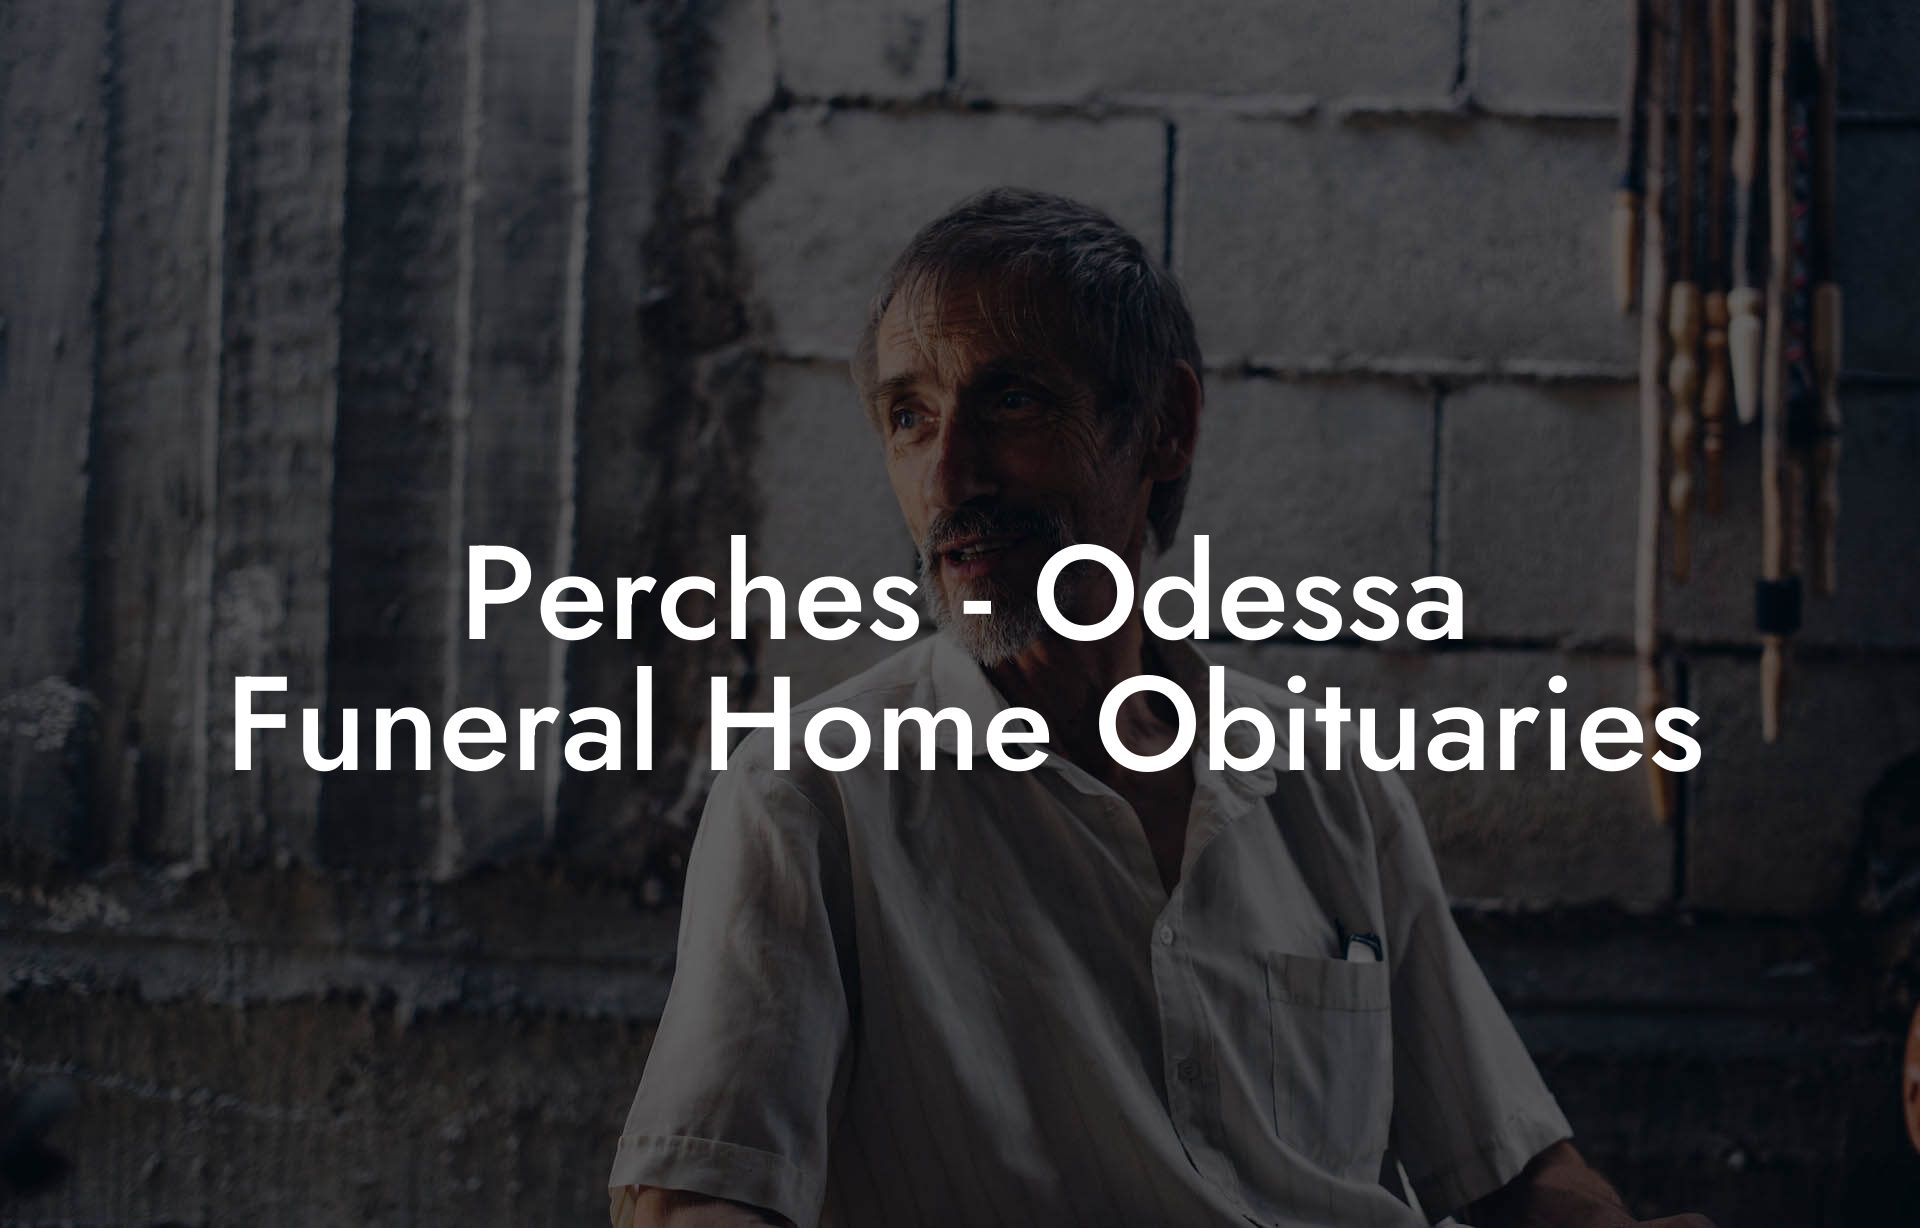 Perches - Odessa Funeral Home Obituaries